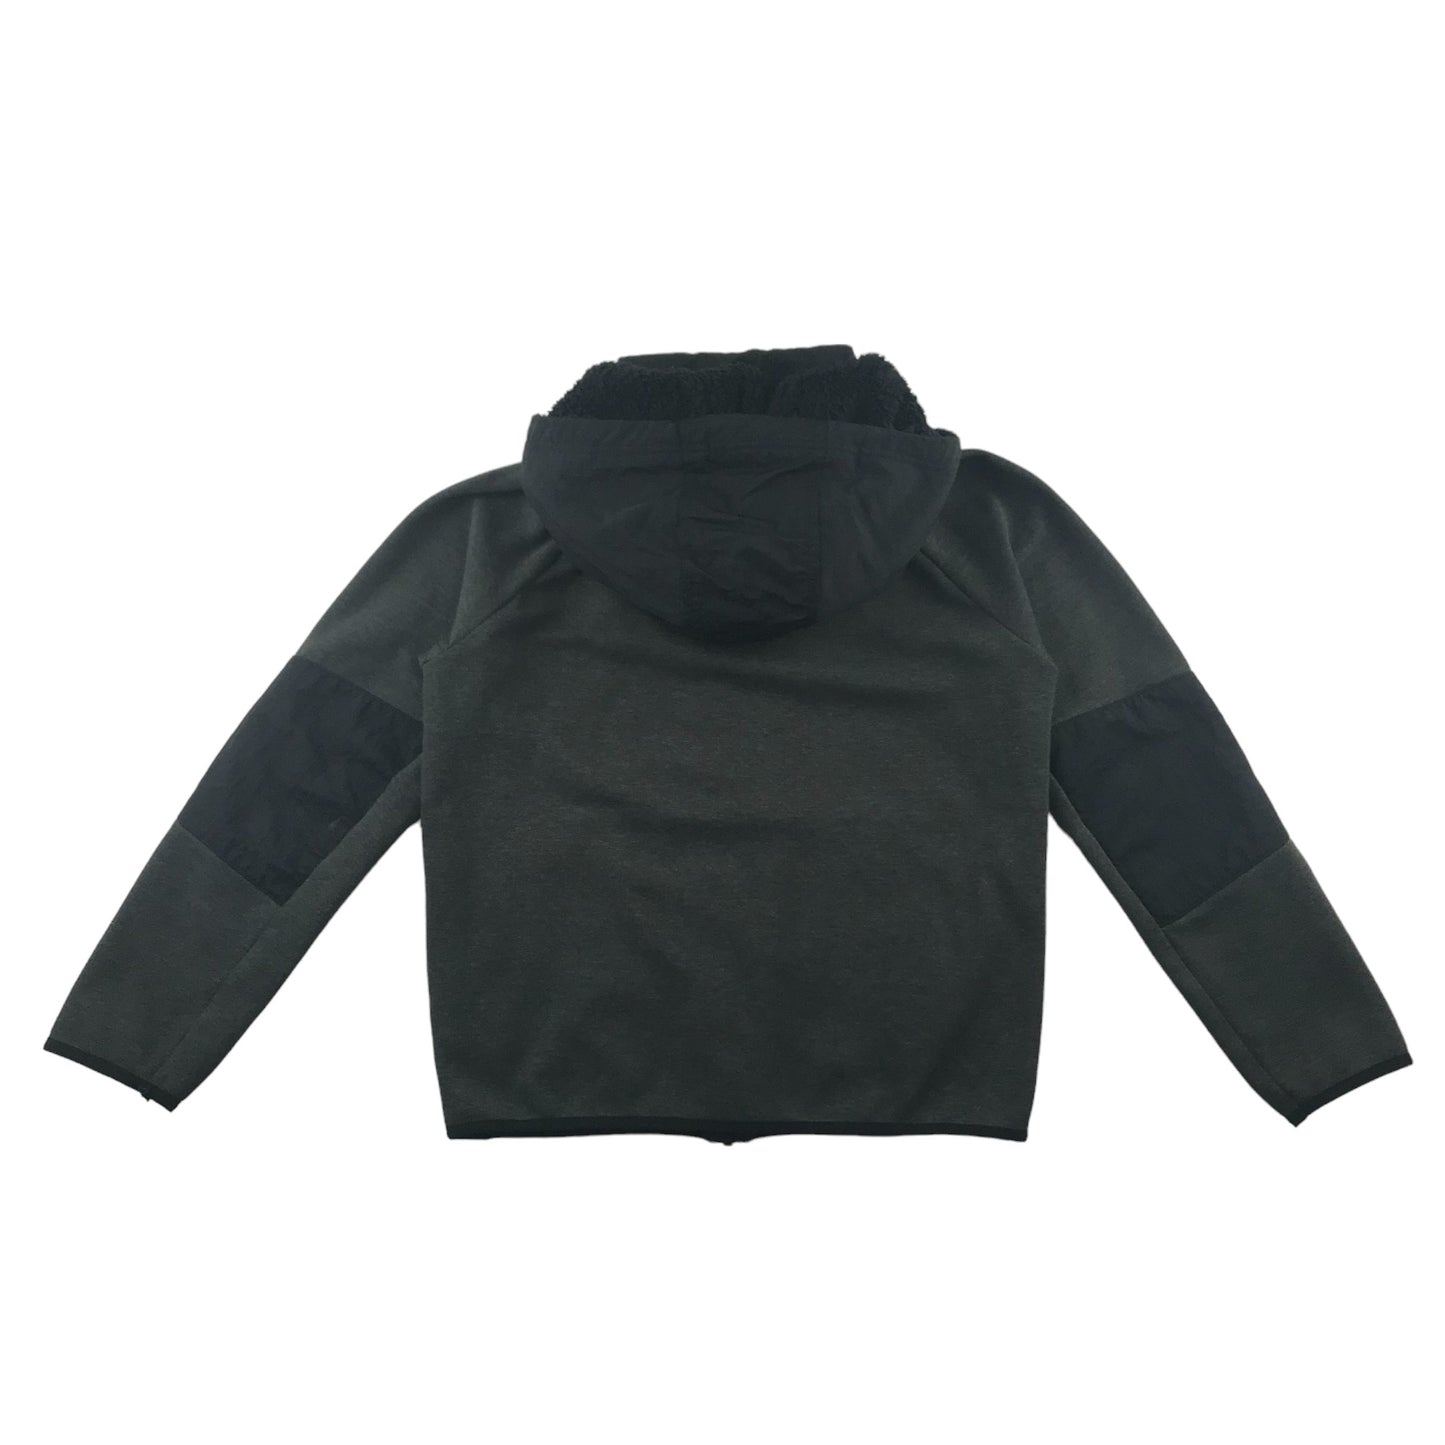 Nike hoodie 11-12 years grey fleece lined hooded light jacket